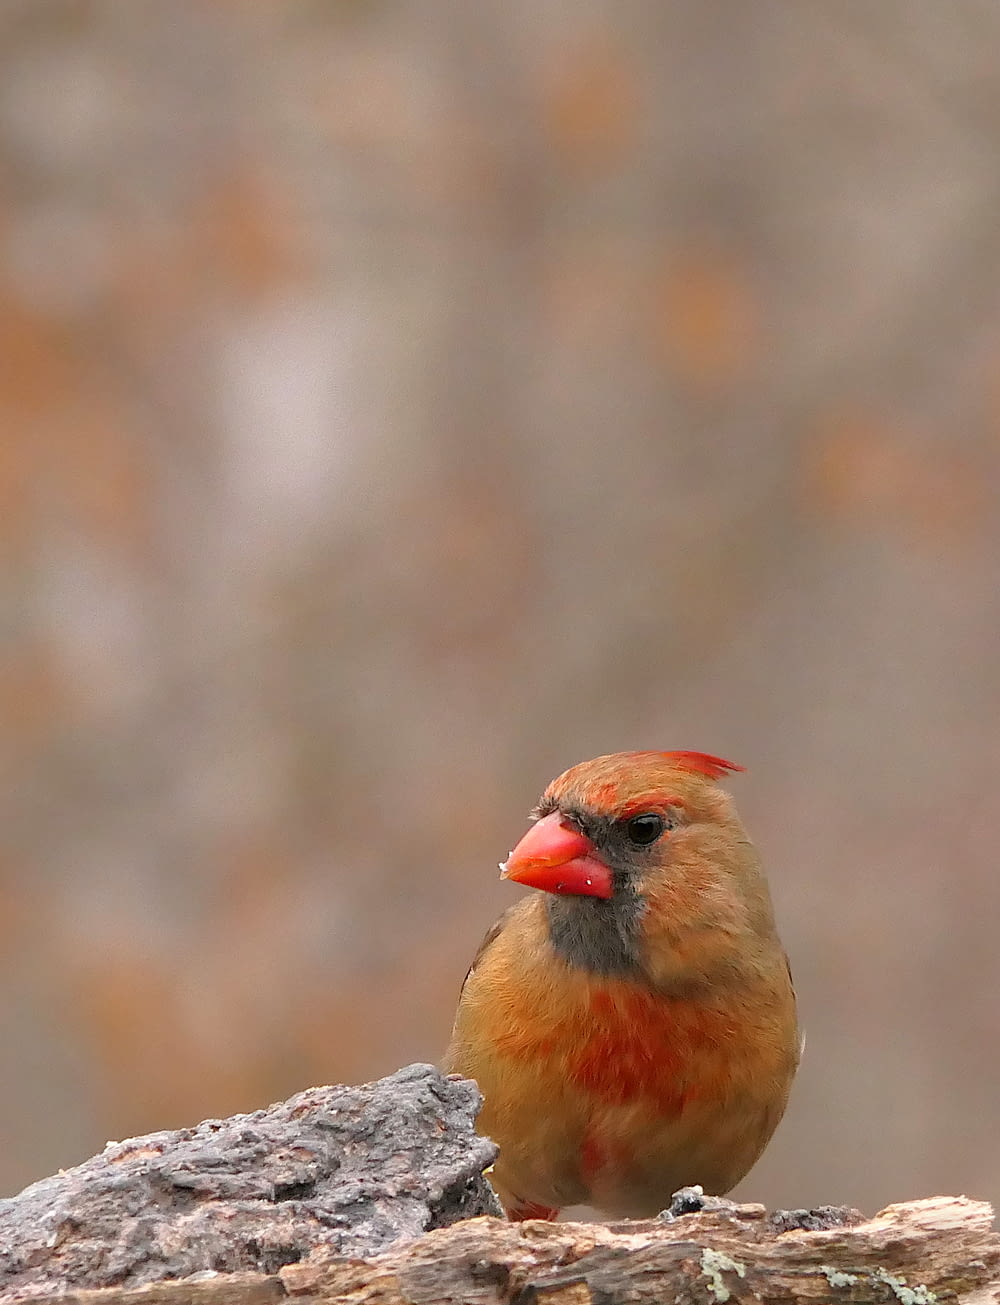 a small orange bird